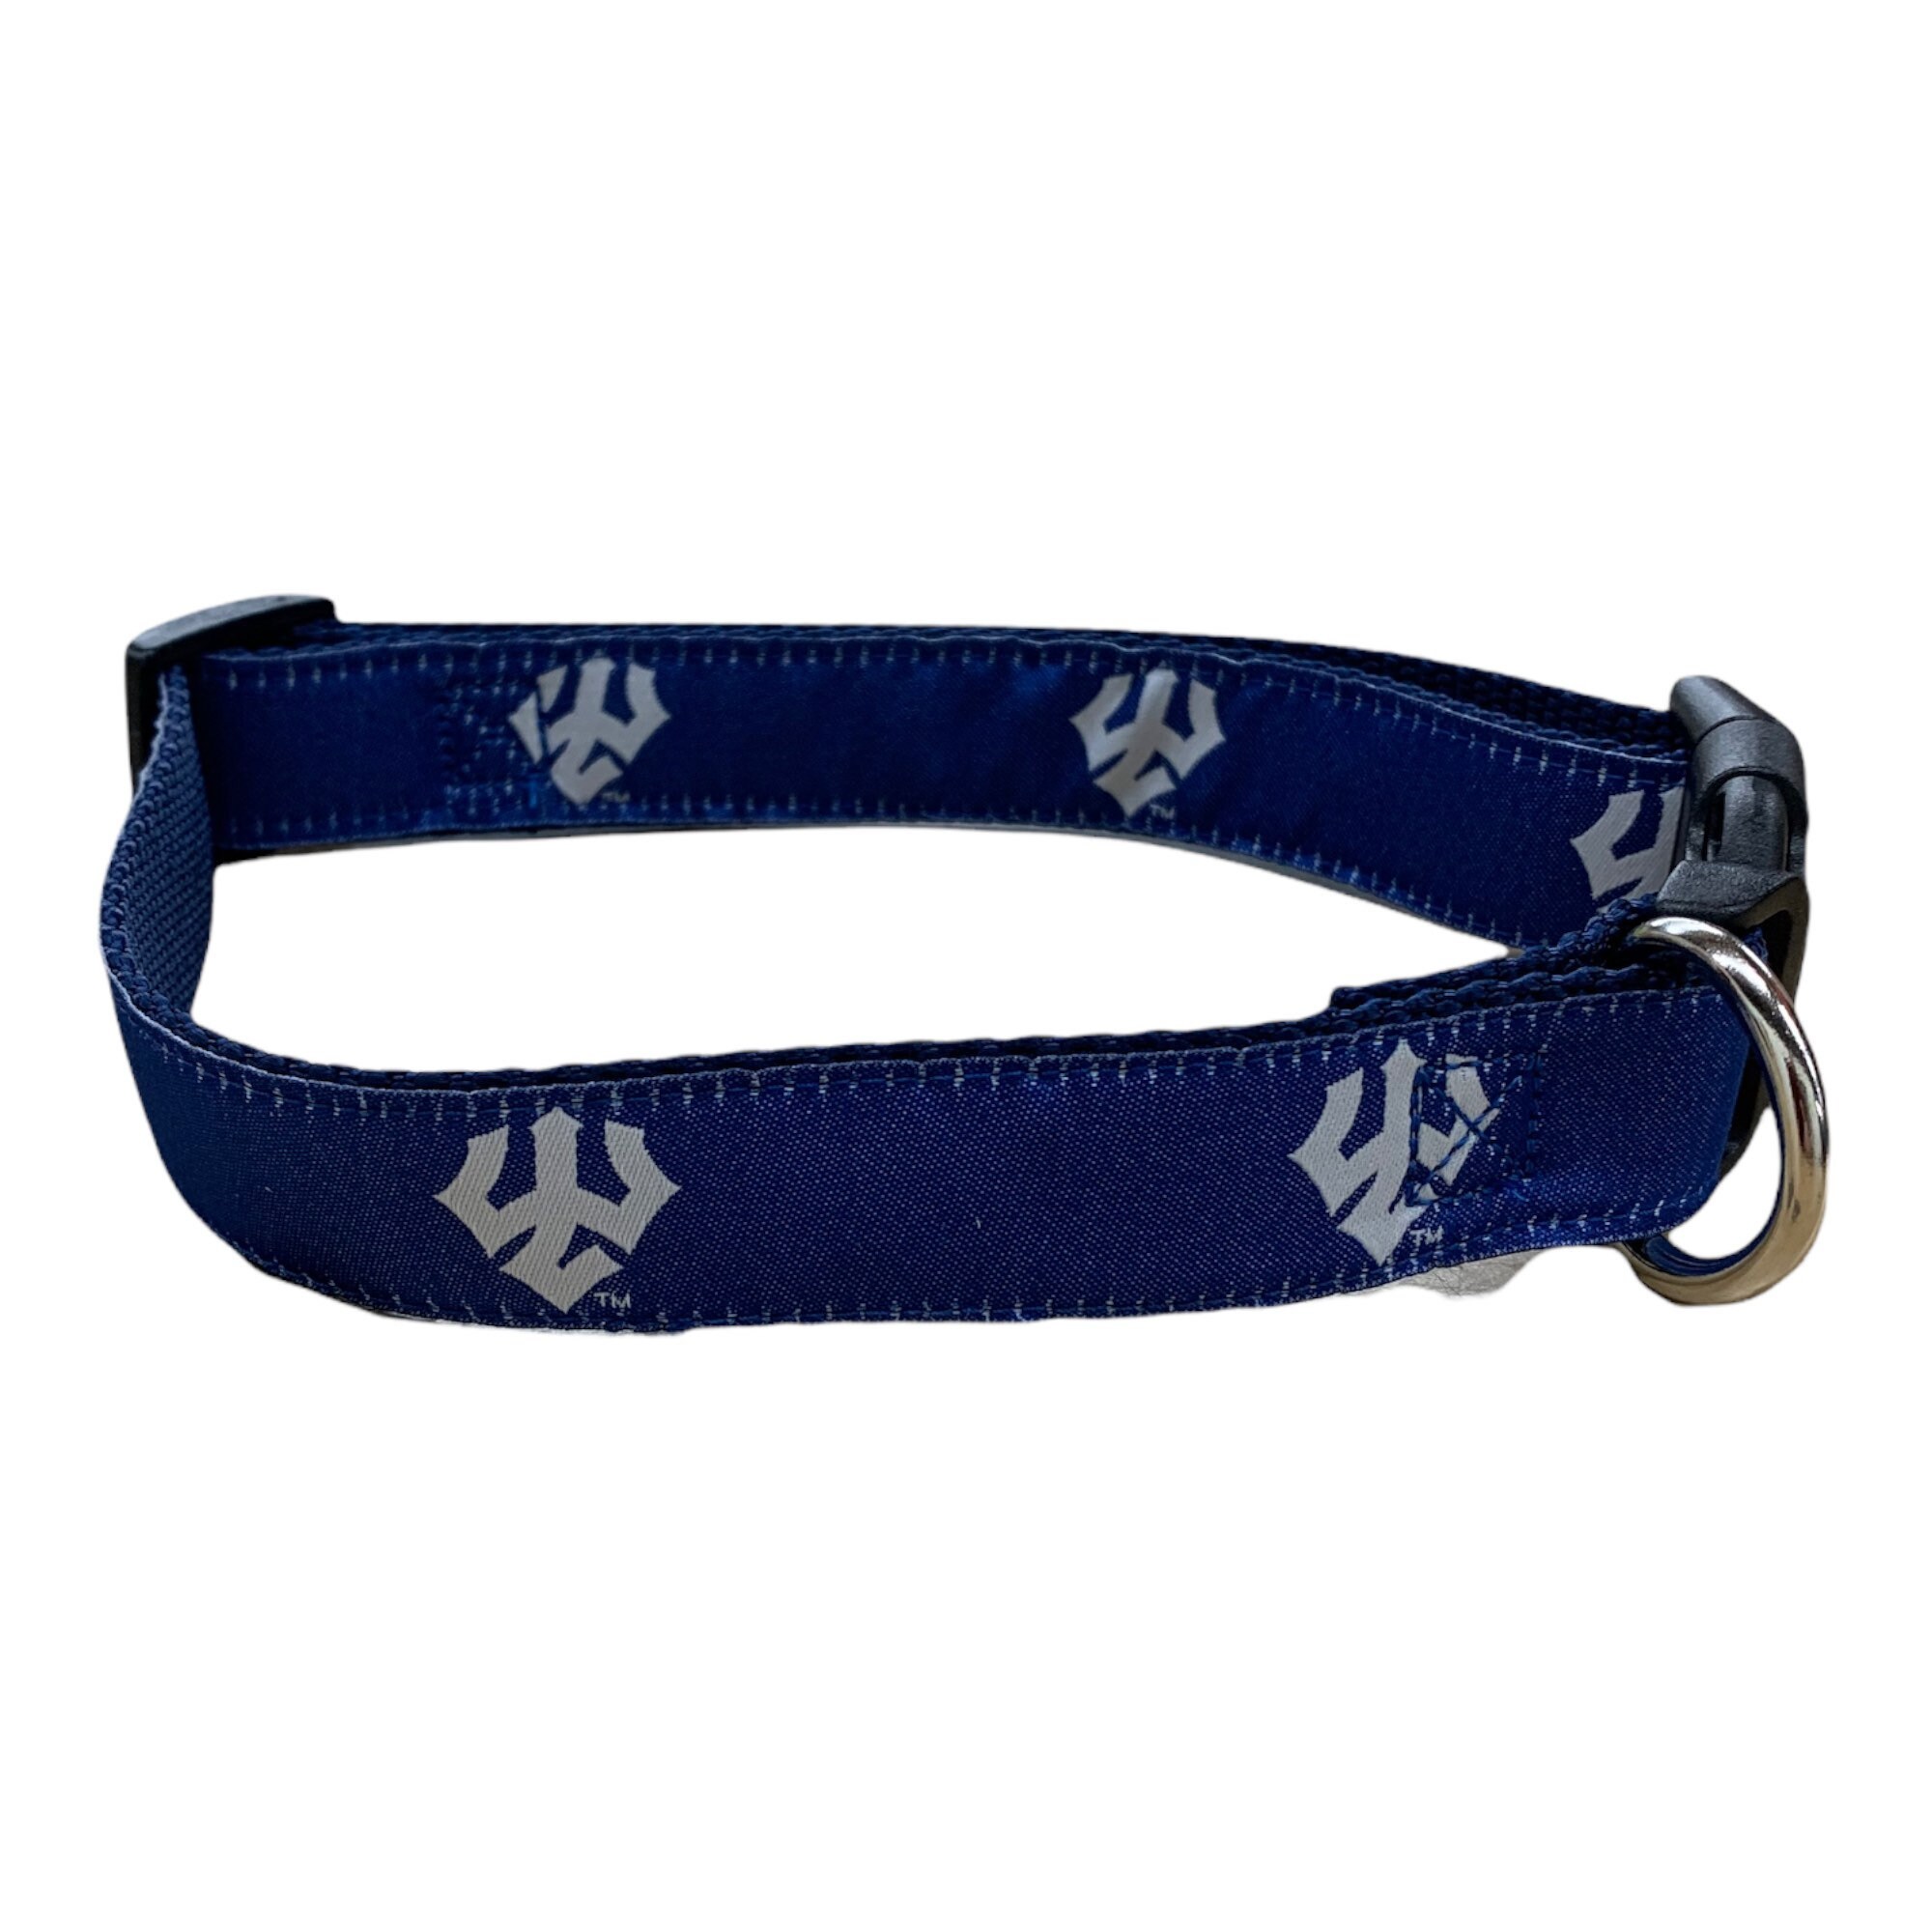 Buy Baylor Bears Ribbon Dog Collar Online